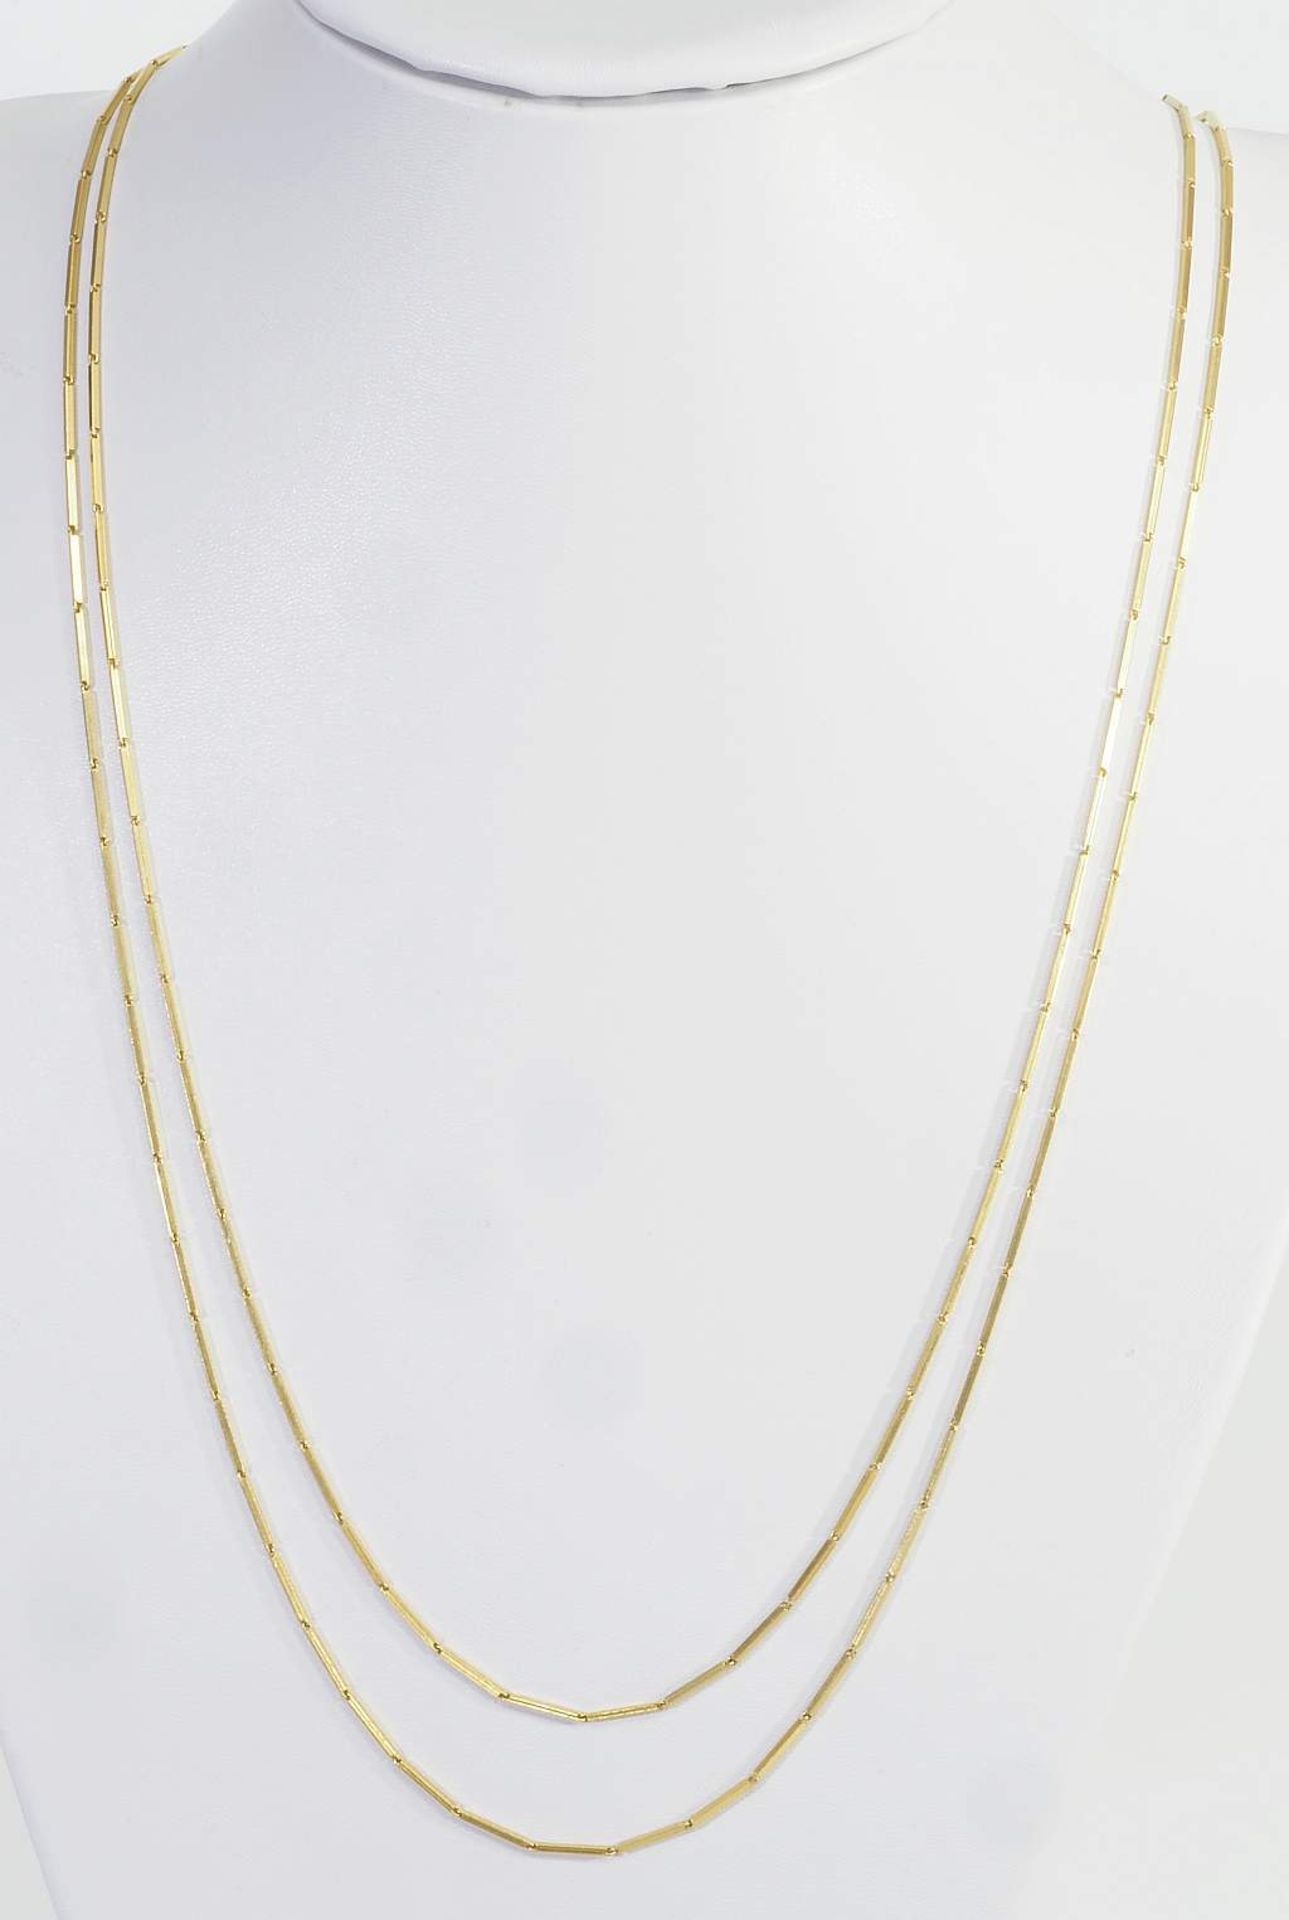 Zweireihige Stabkette.Zweireihige Stabkette mit Ringösenverschluß. 750er Gelbgold, Länge ca. 78 - Image 2 of 5